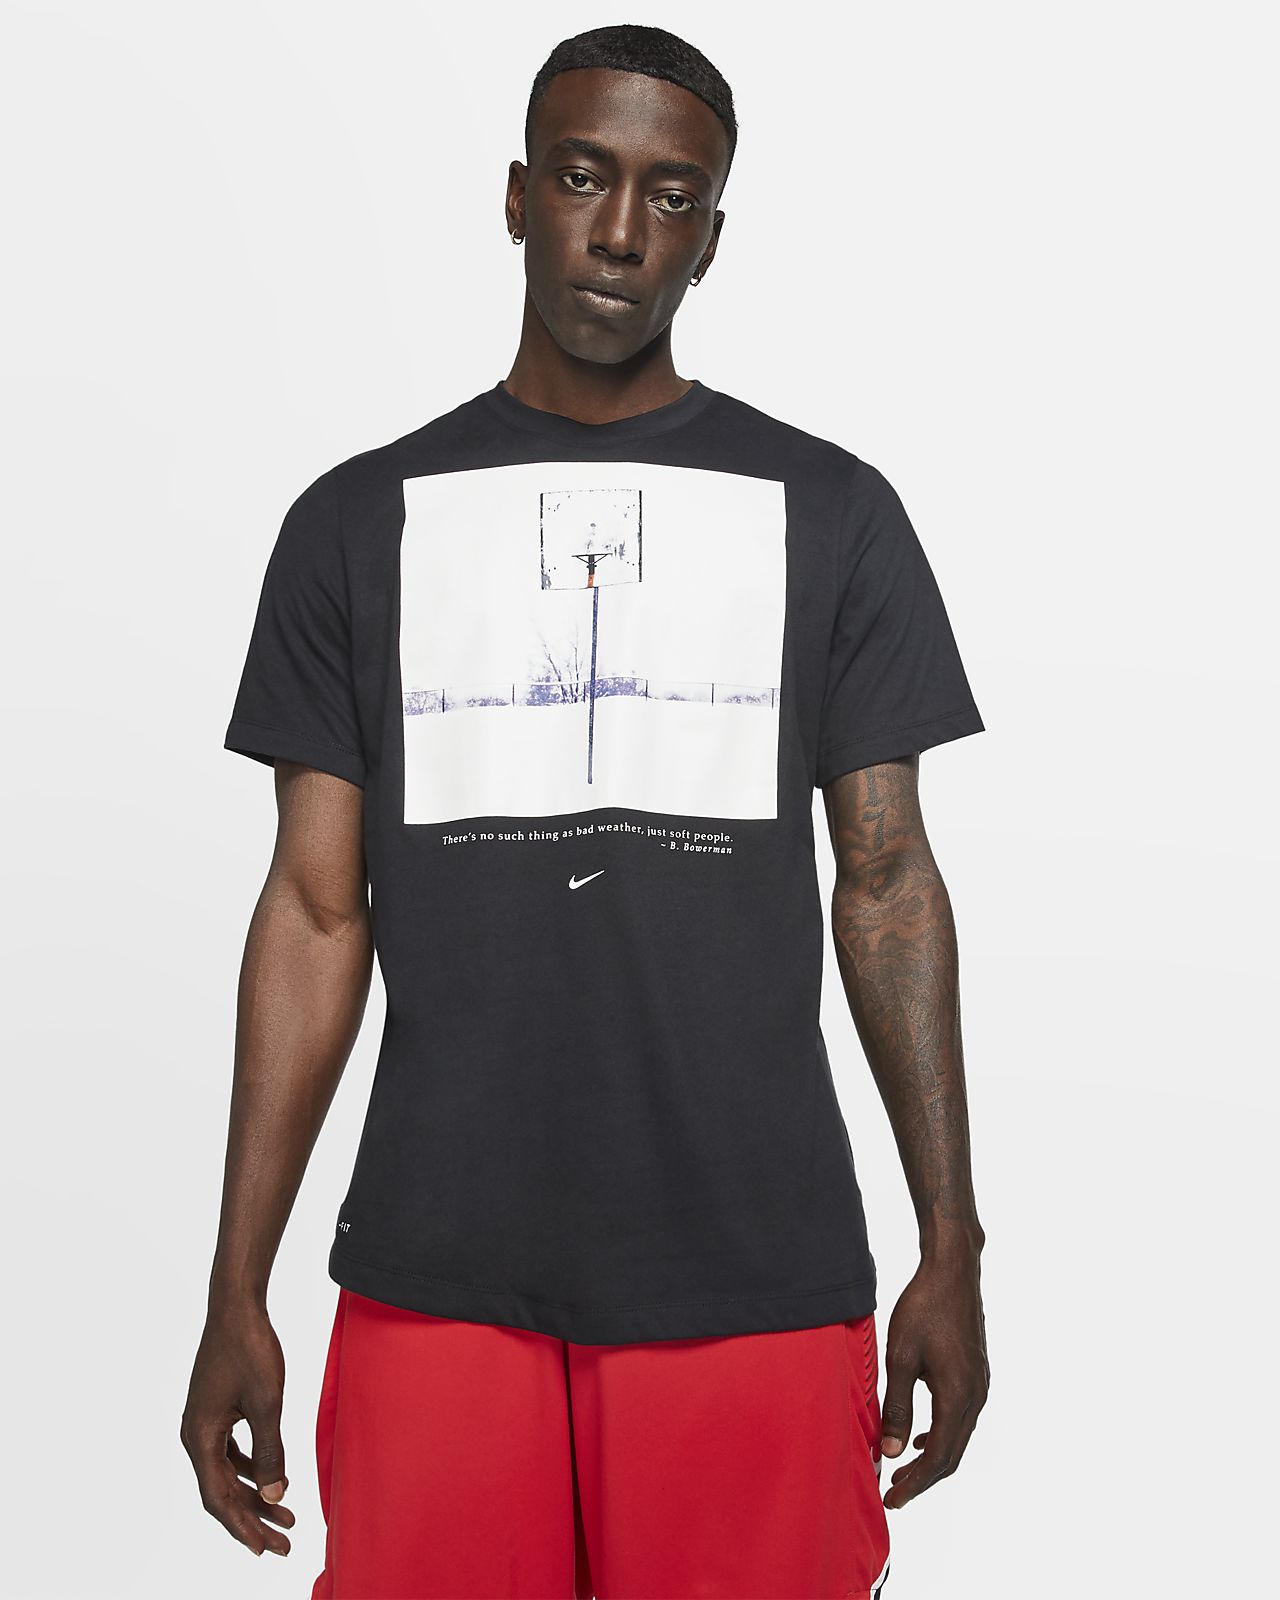 Nike Dri Fit T Shirt Size Chart